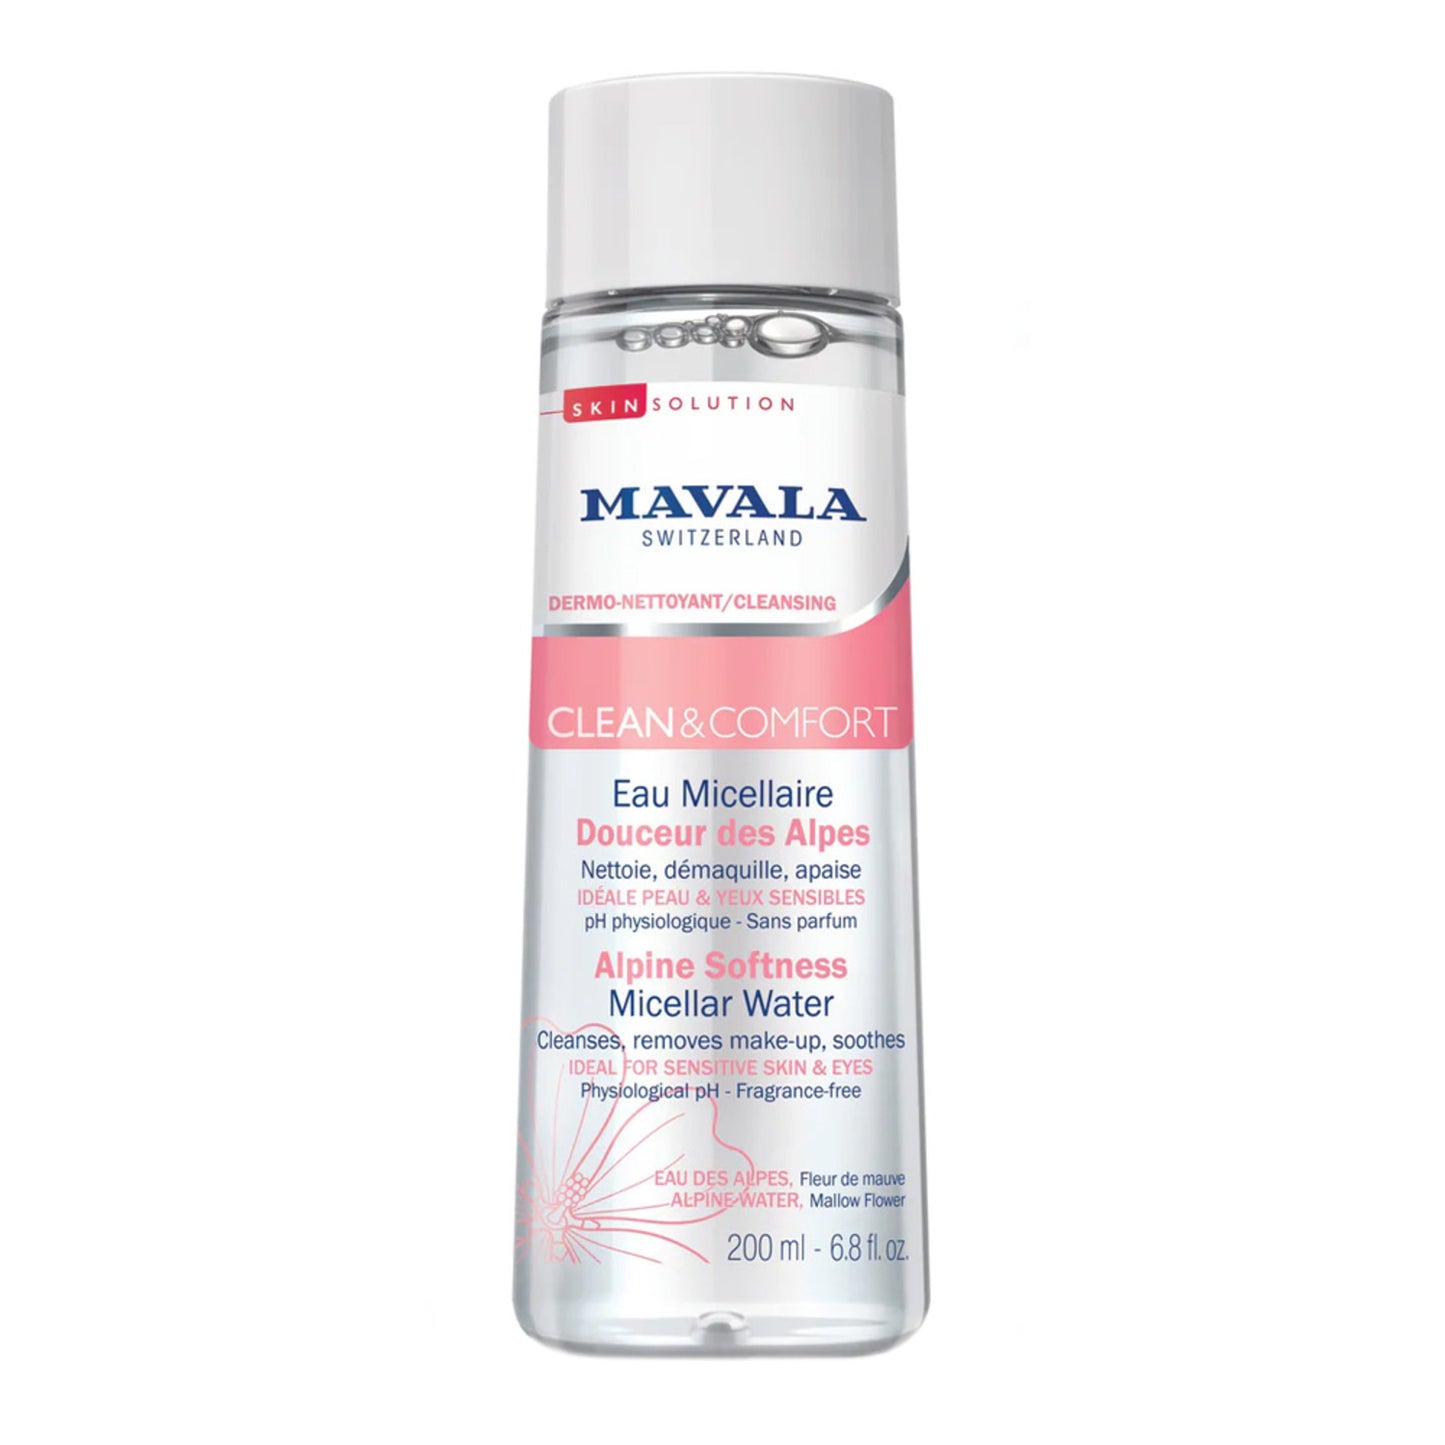 MAVALA Skin Solution Clean and Comfort Eau Micellaire Douceur Alpine